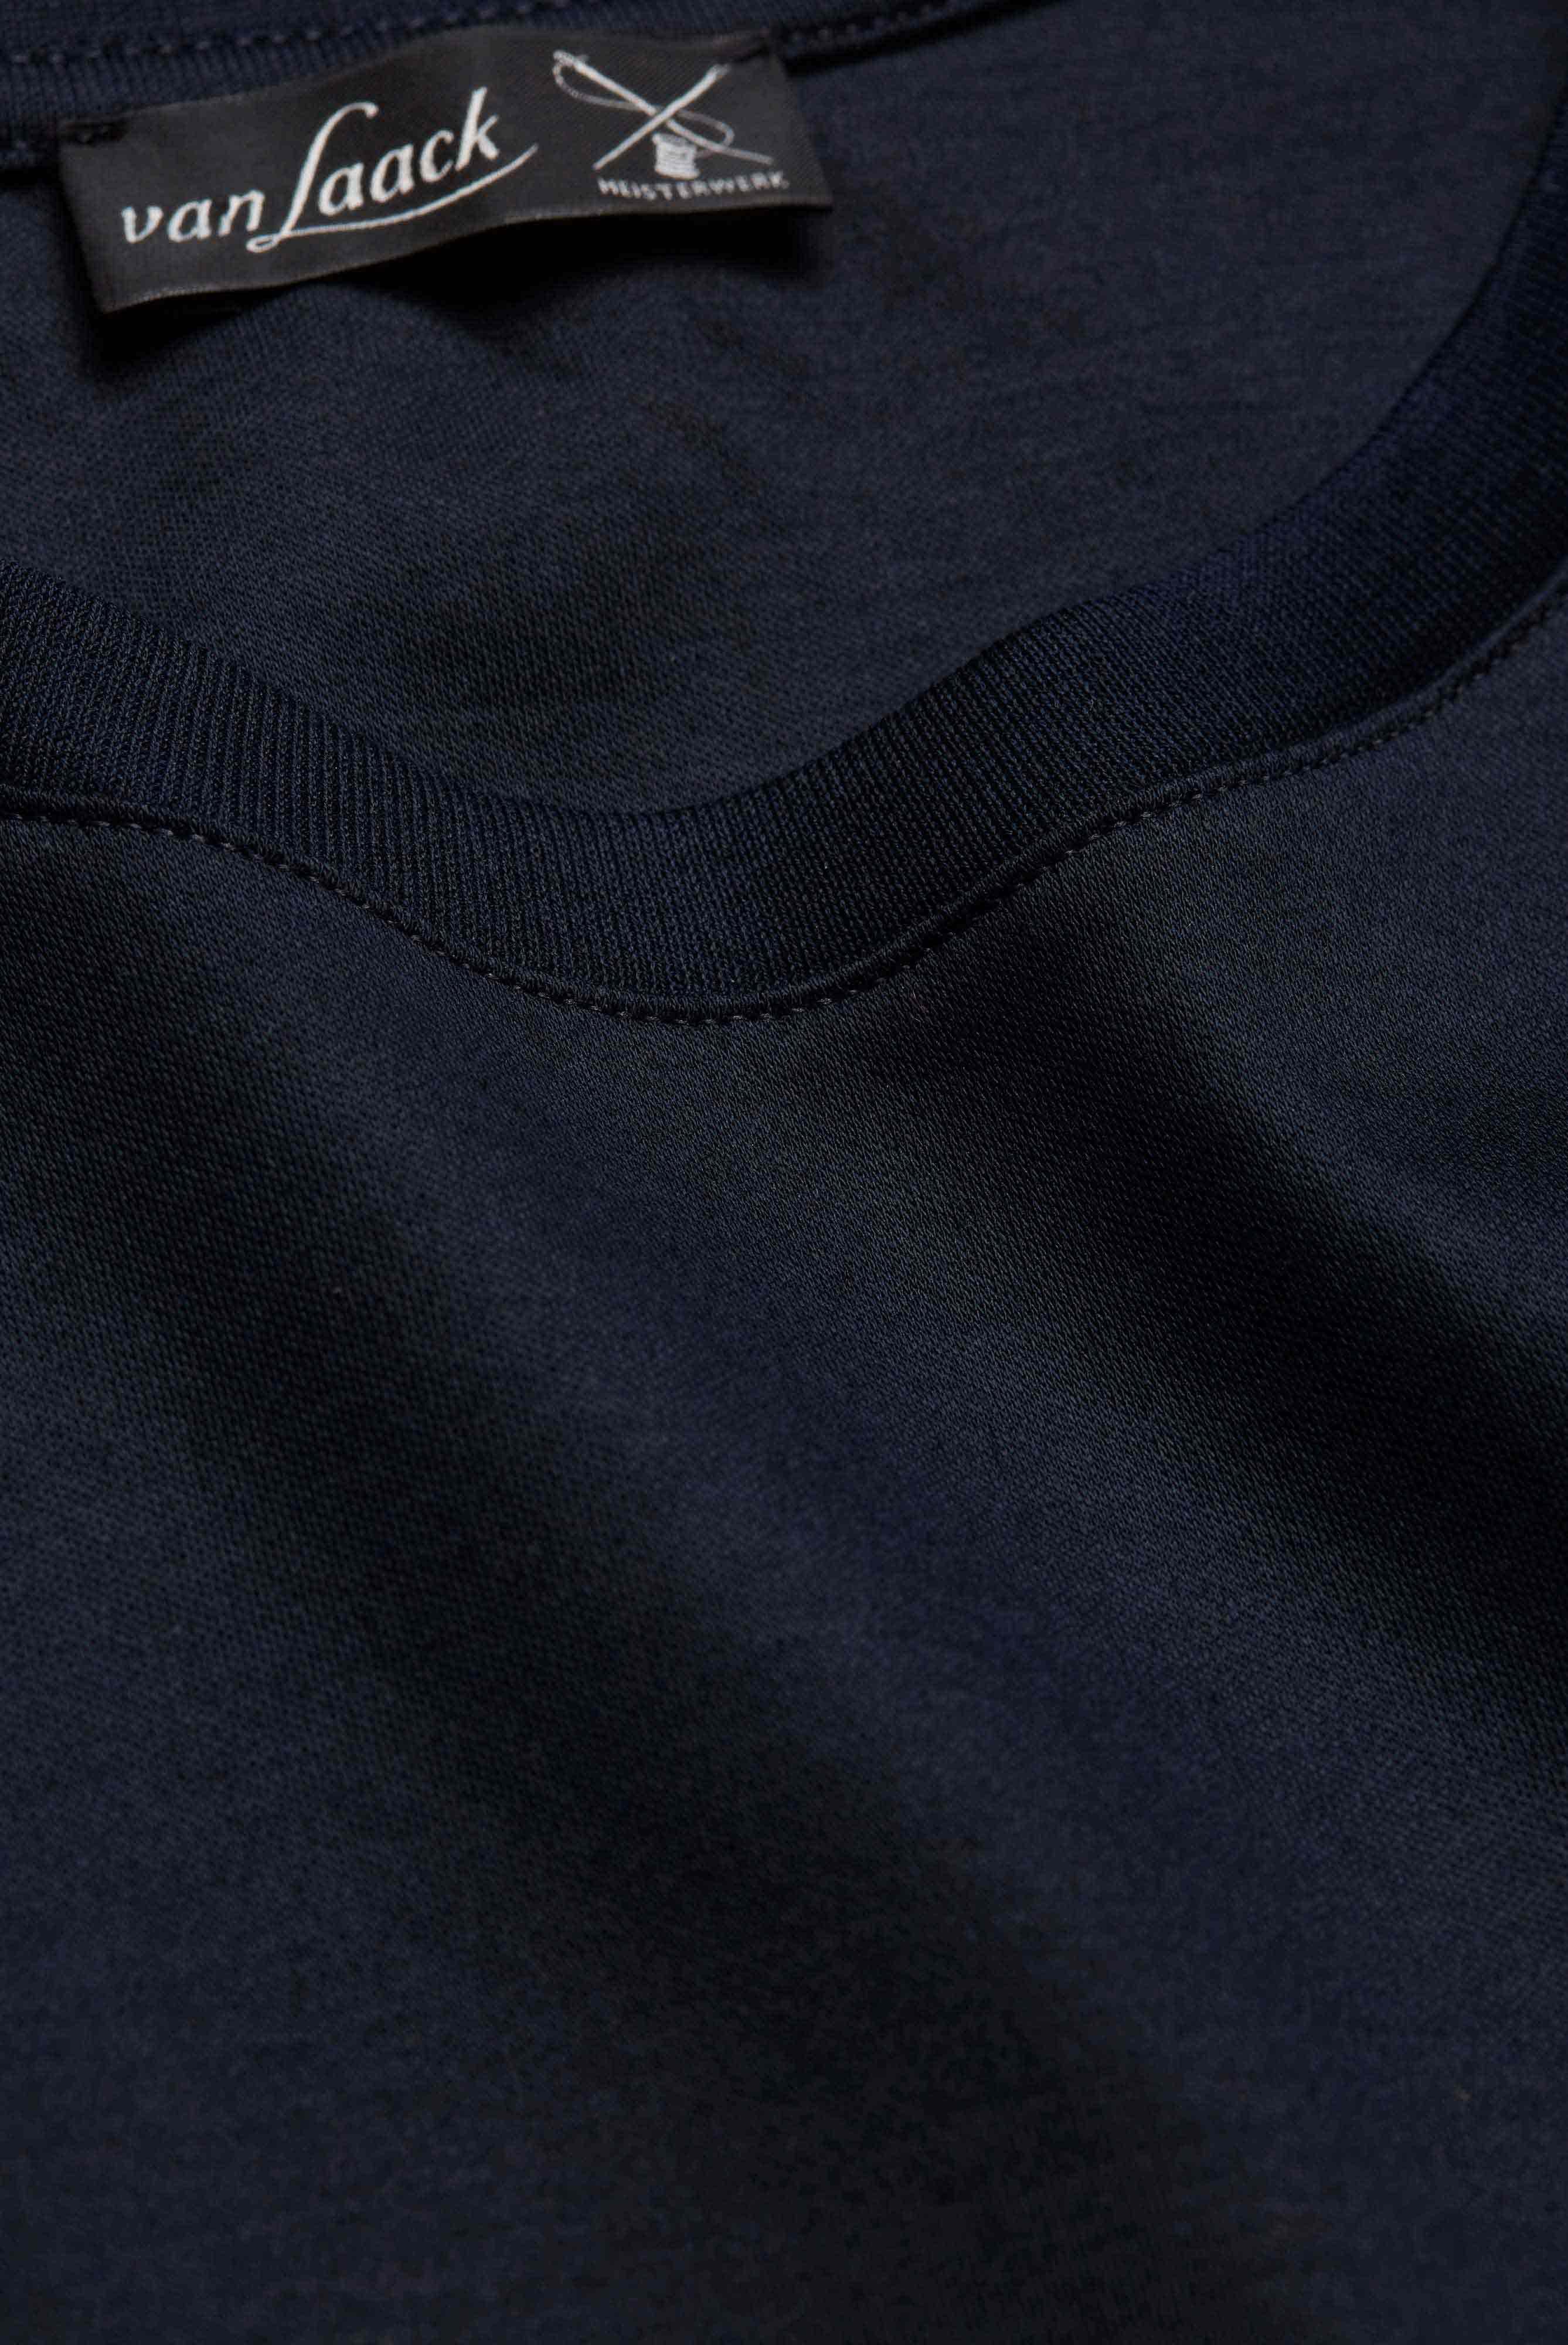 T-Shirts+Swiss Cotton Jersey Crew Neck T-Shirt+20.1717.UX.180031.790.L